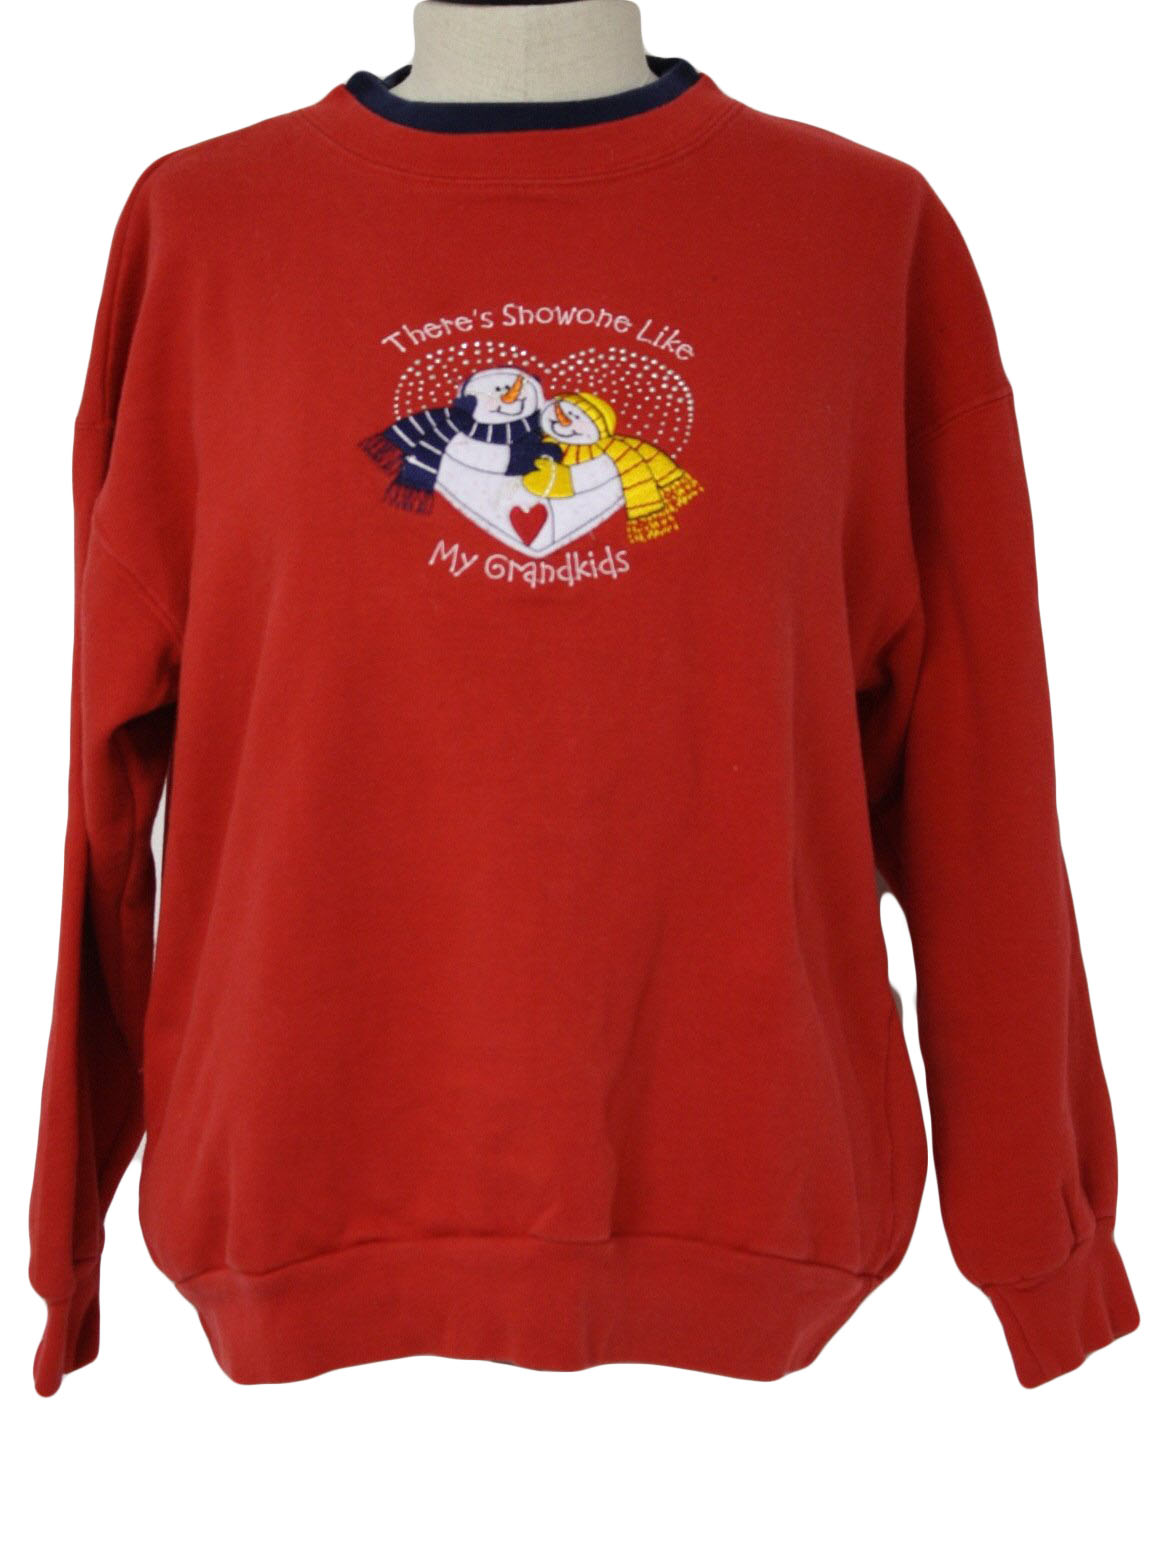 Ugly Christmas Sweatshirt: -MC sportswear- Unisex red, blue, white ...